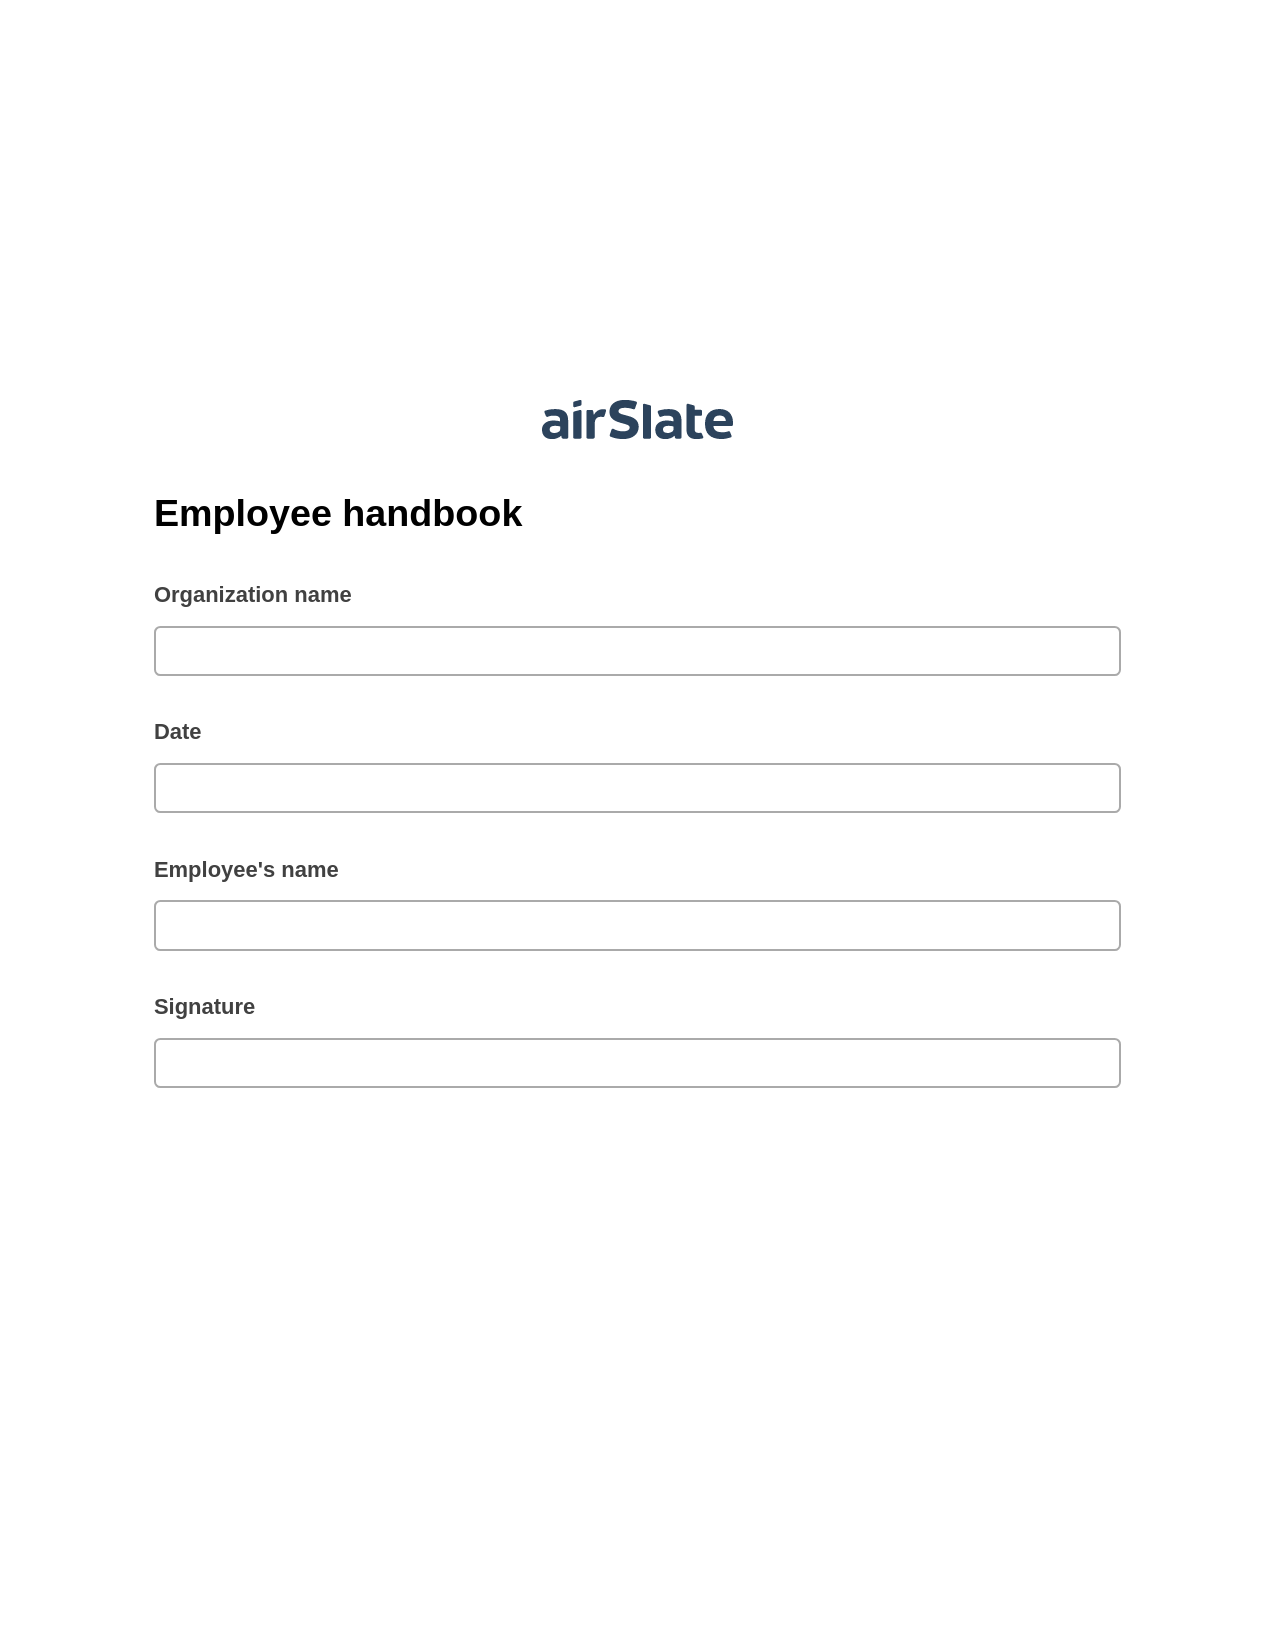 Multirole Employee handbook Pre-fill from NetSuite Records Bot, Document Hide Bot, OneDrive Bot